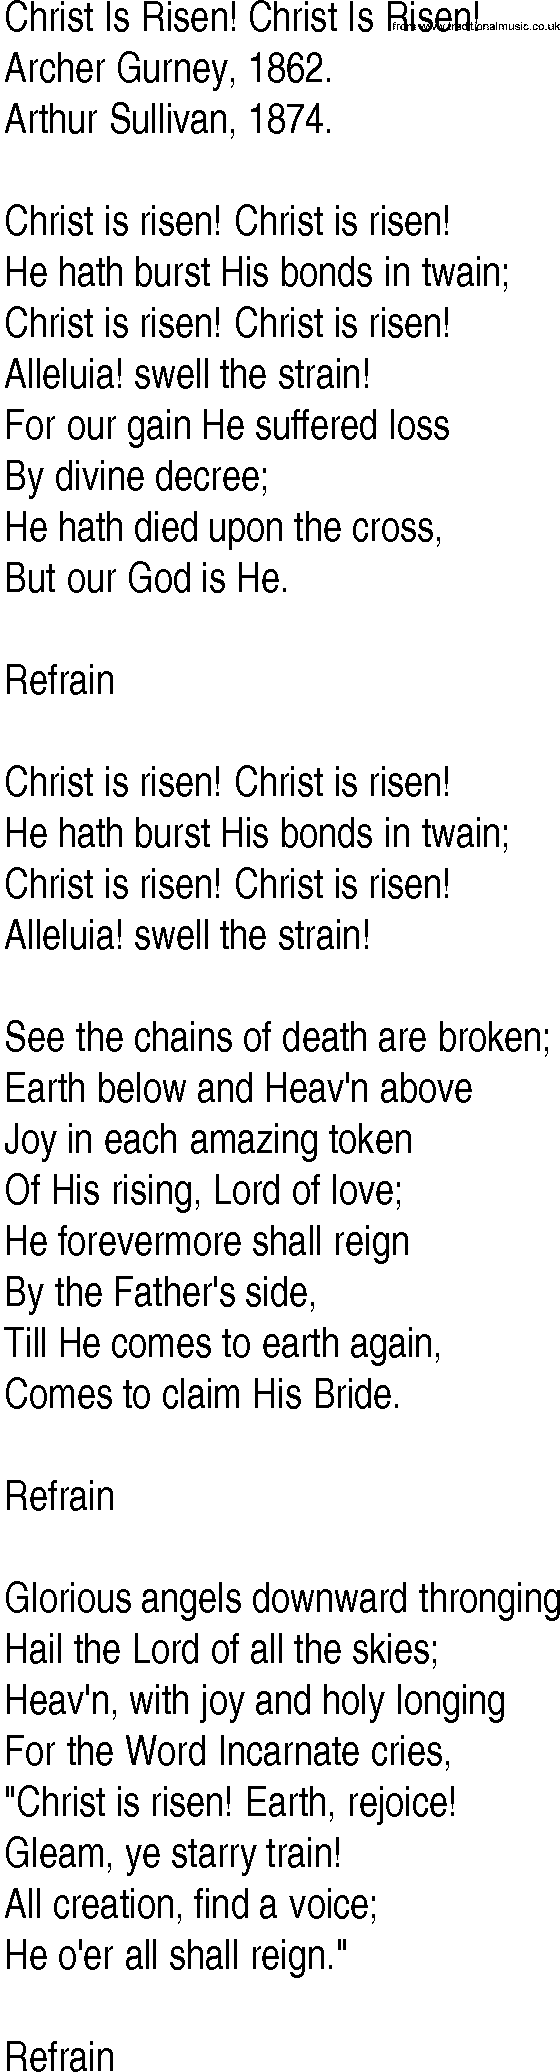 Hymn and Gospel Song: Christ Is Risen! Christ Is Risen! by Archer Gurney lyrics